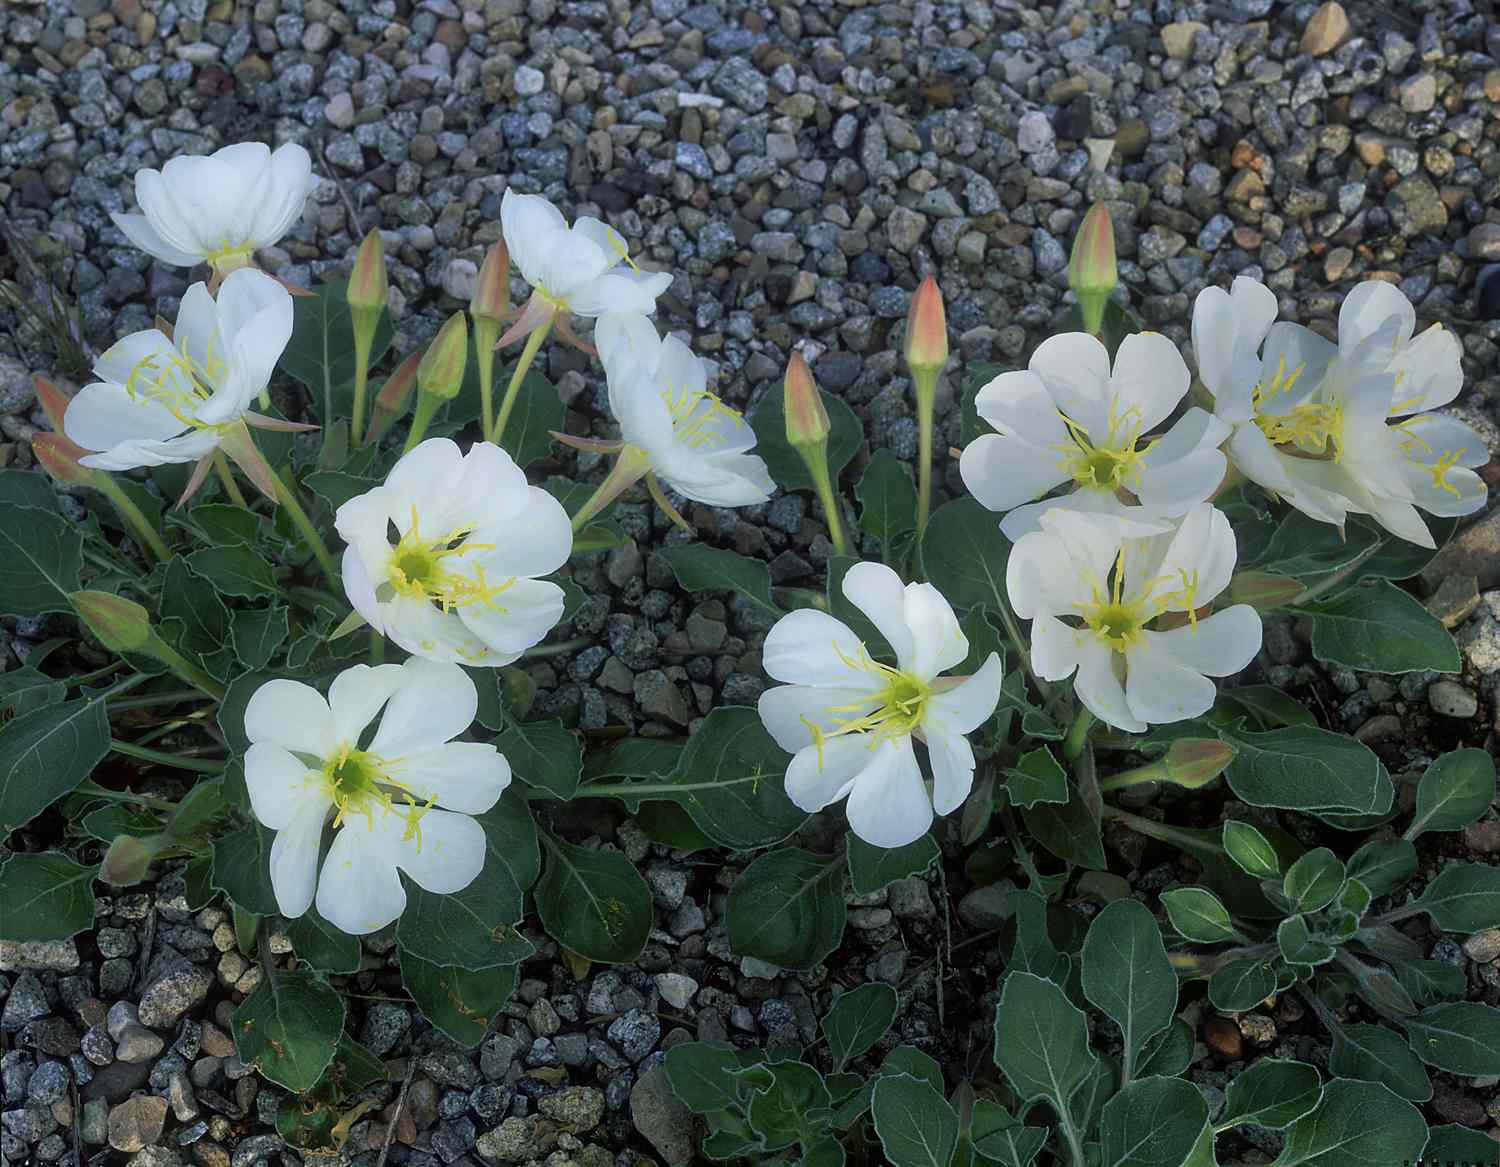 White evening primrose flowers